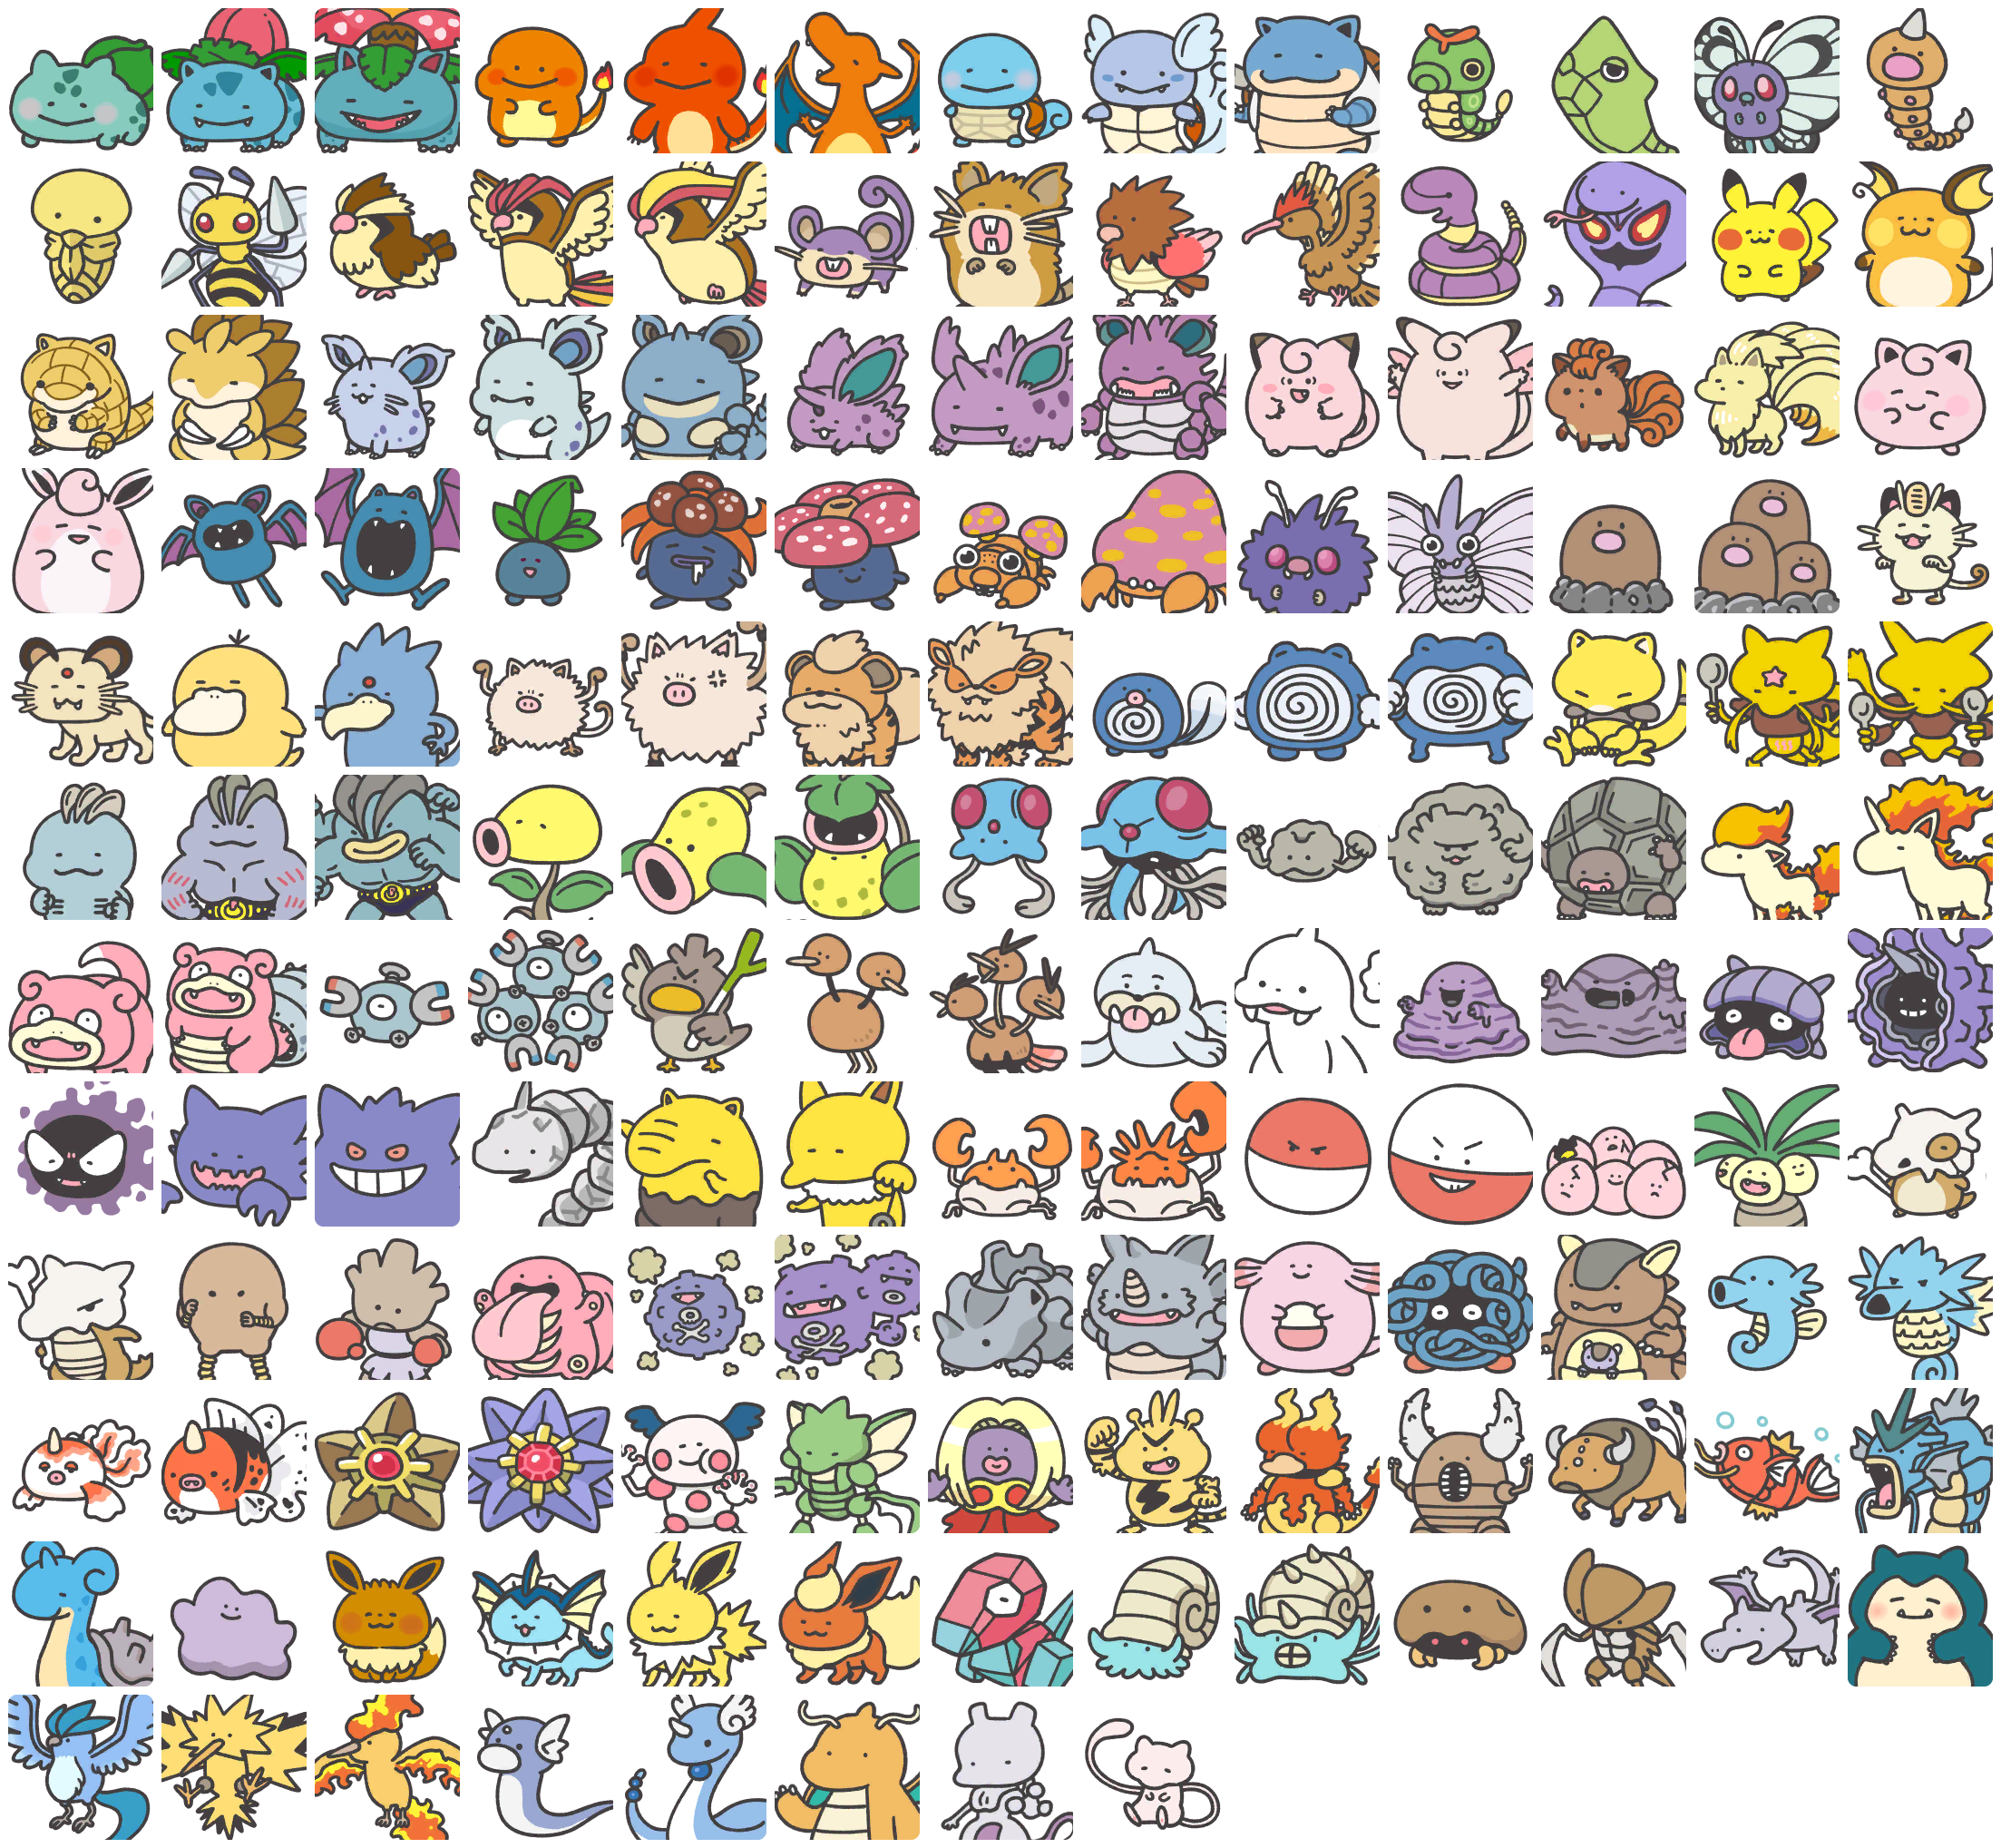 Pokémon Smile - Pokémon Icons (1st Generation)